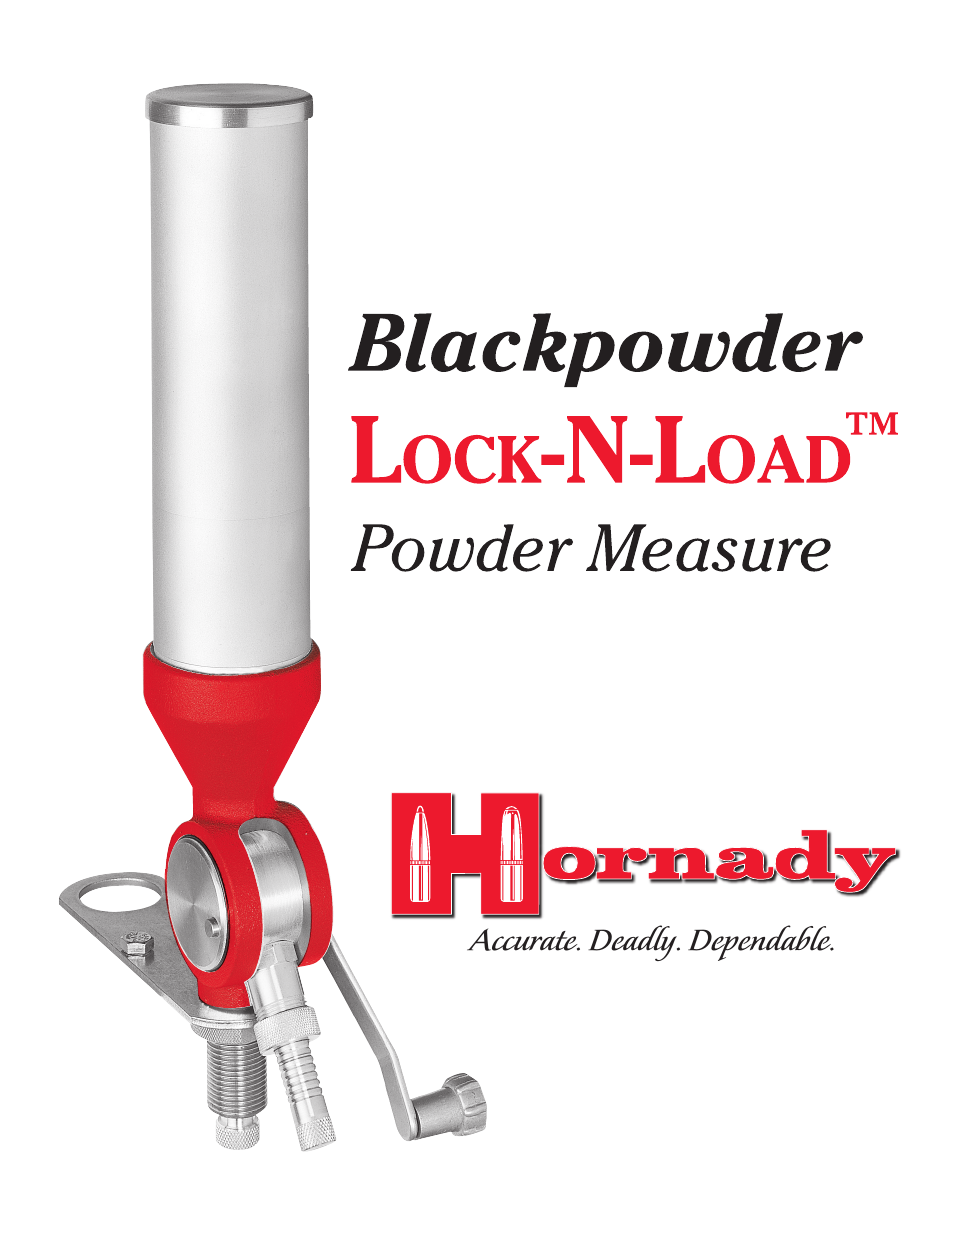 Blackpowder Lock-N-Load Powder Measure